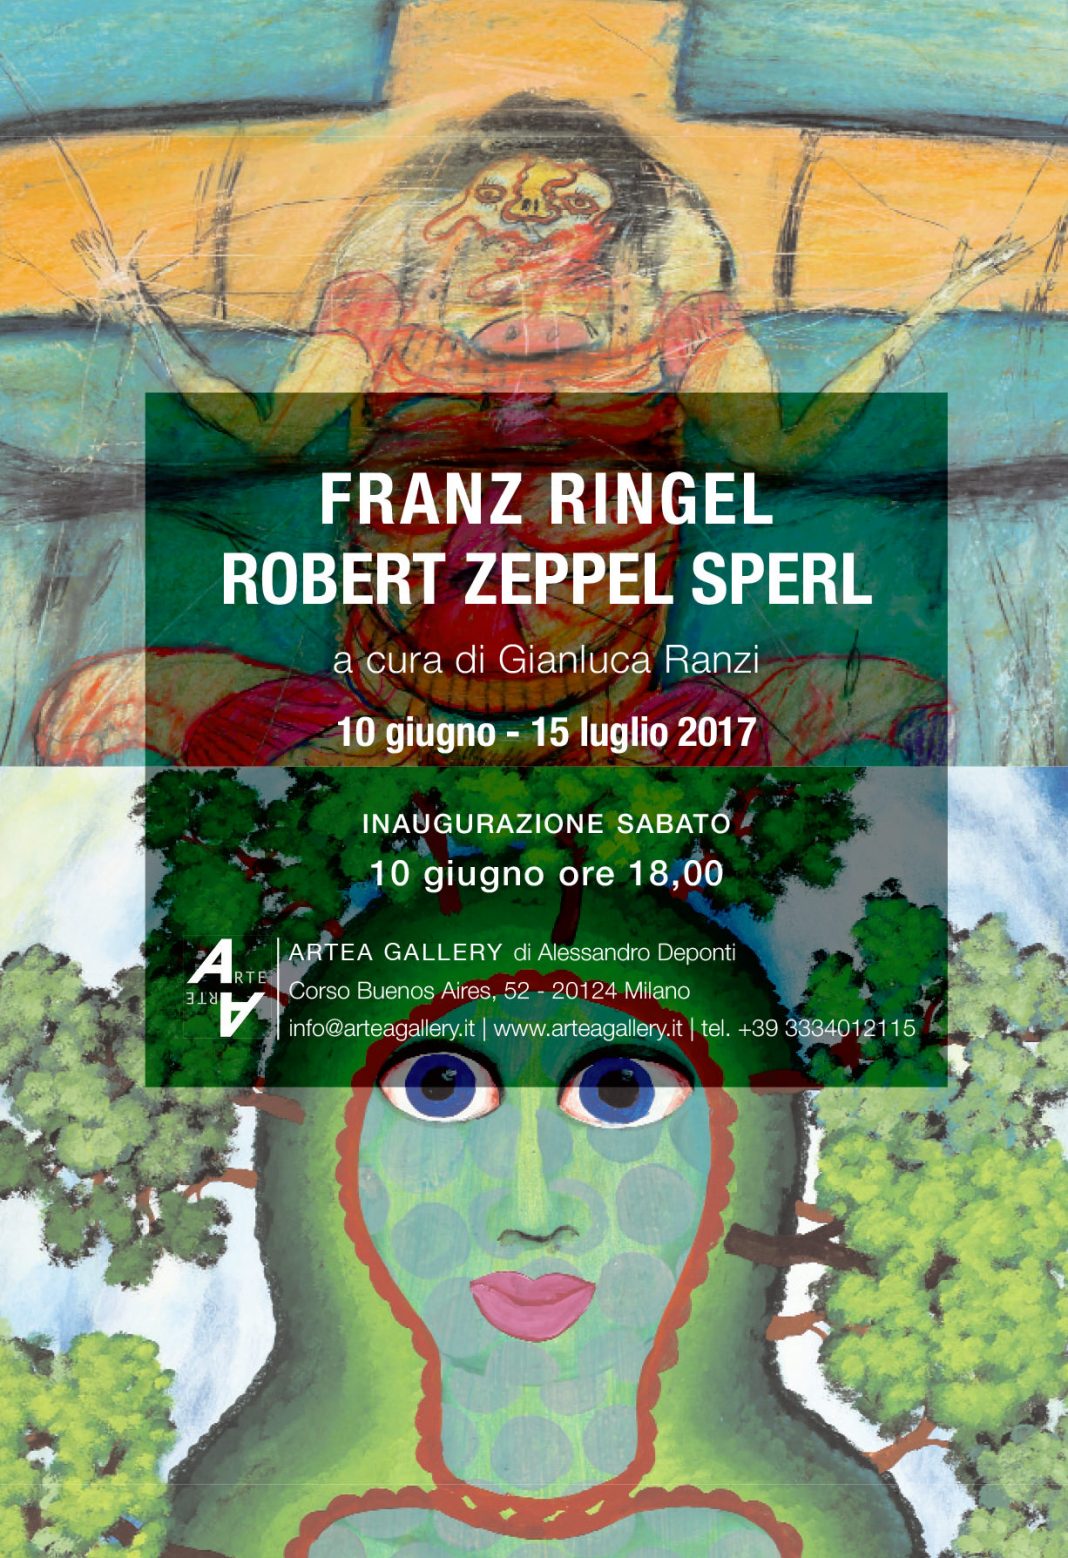 Franz Ringel / Robert Zeppel Sperlhttps://www.exibart.com/repository/media/eventi/2017/05/franz-ringel-robert-zeppel-sperl-1068x1558.jpg